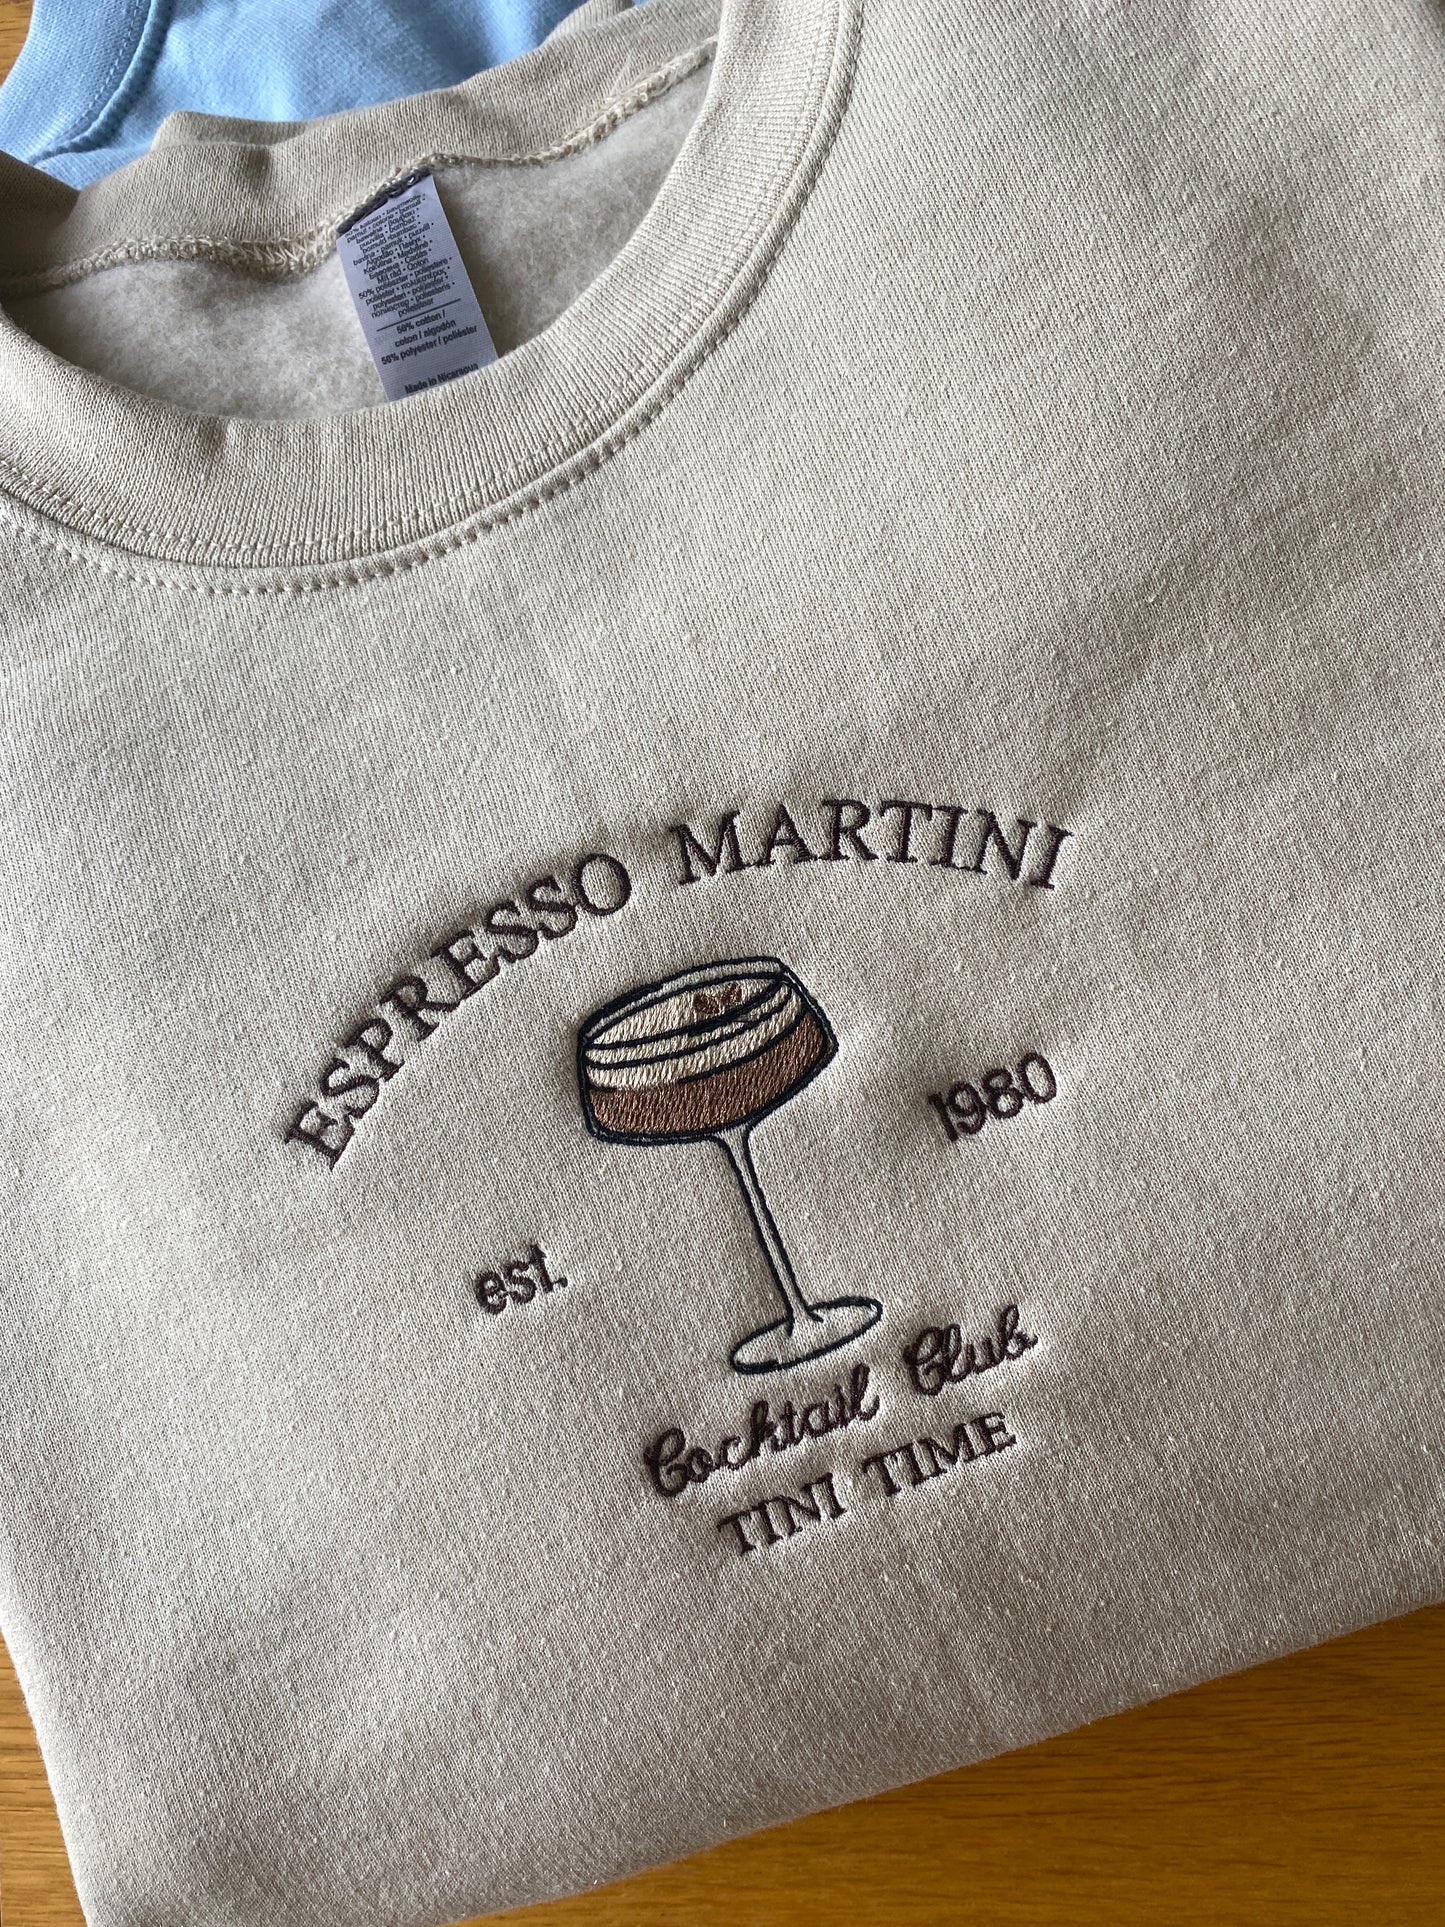 Martini Embroidered Sweatshirt